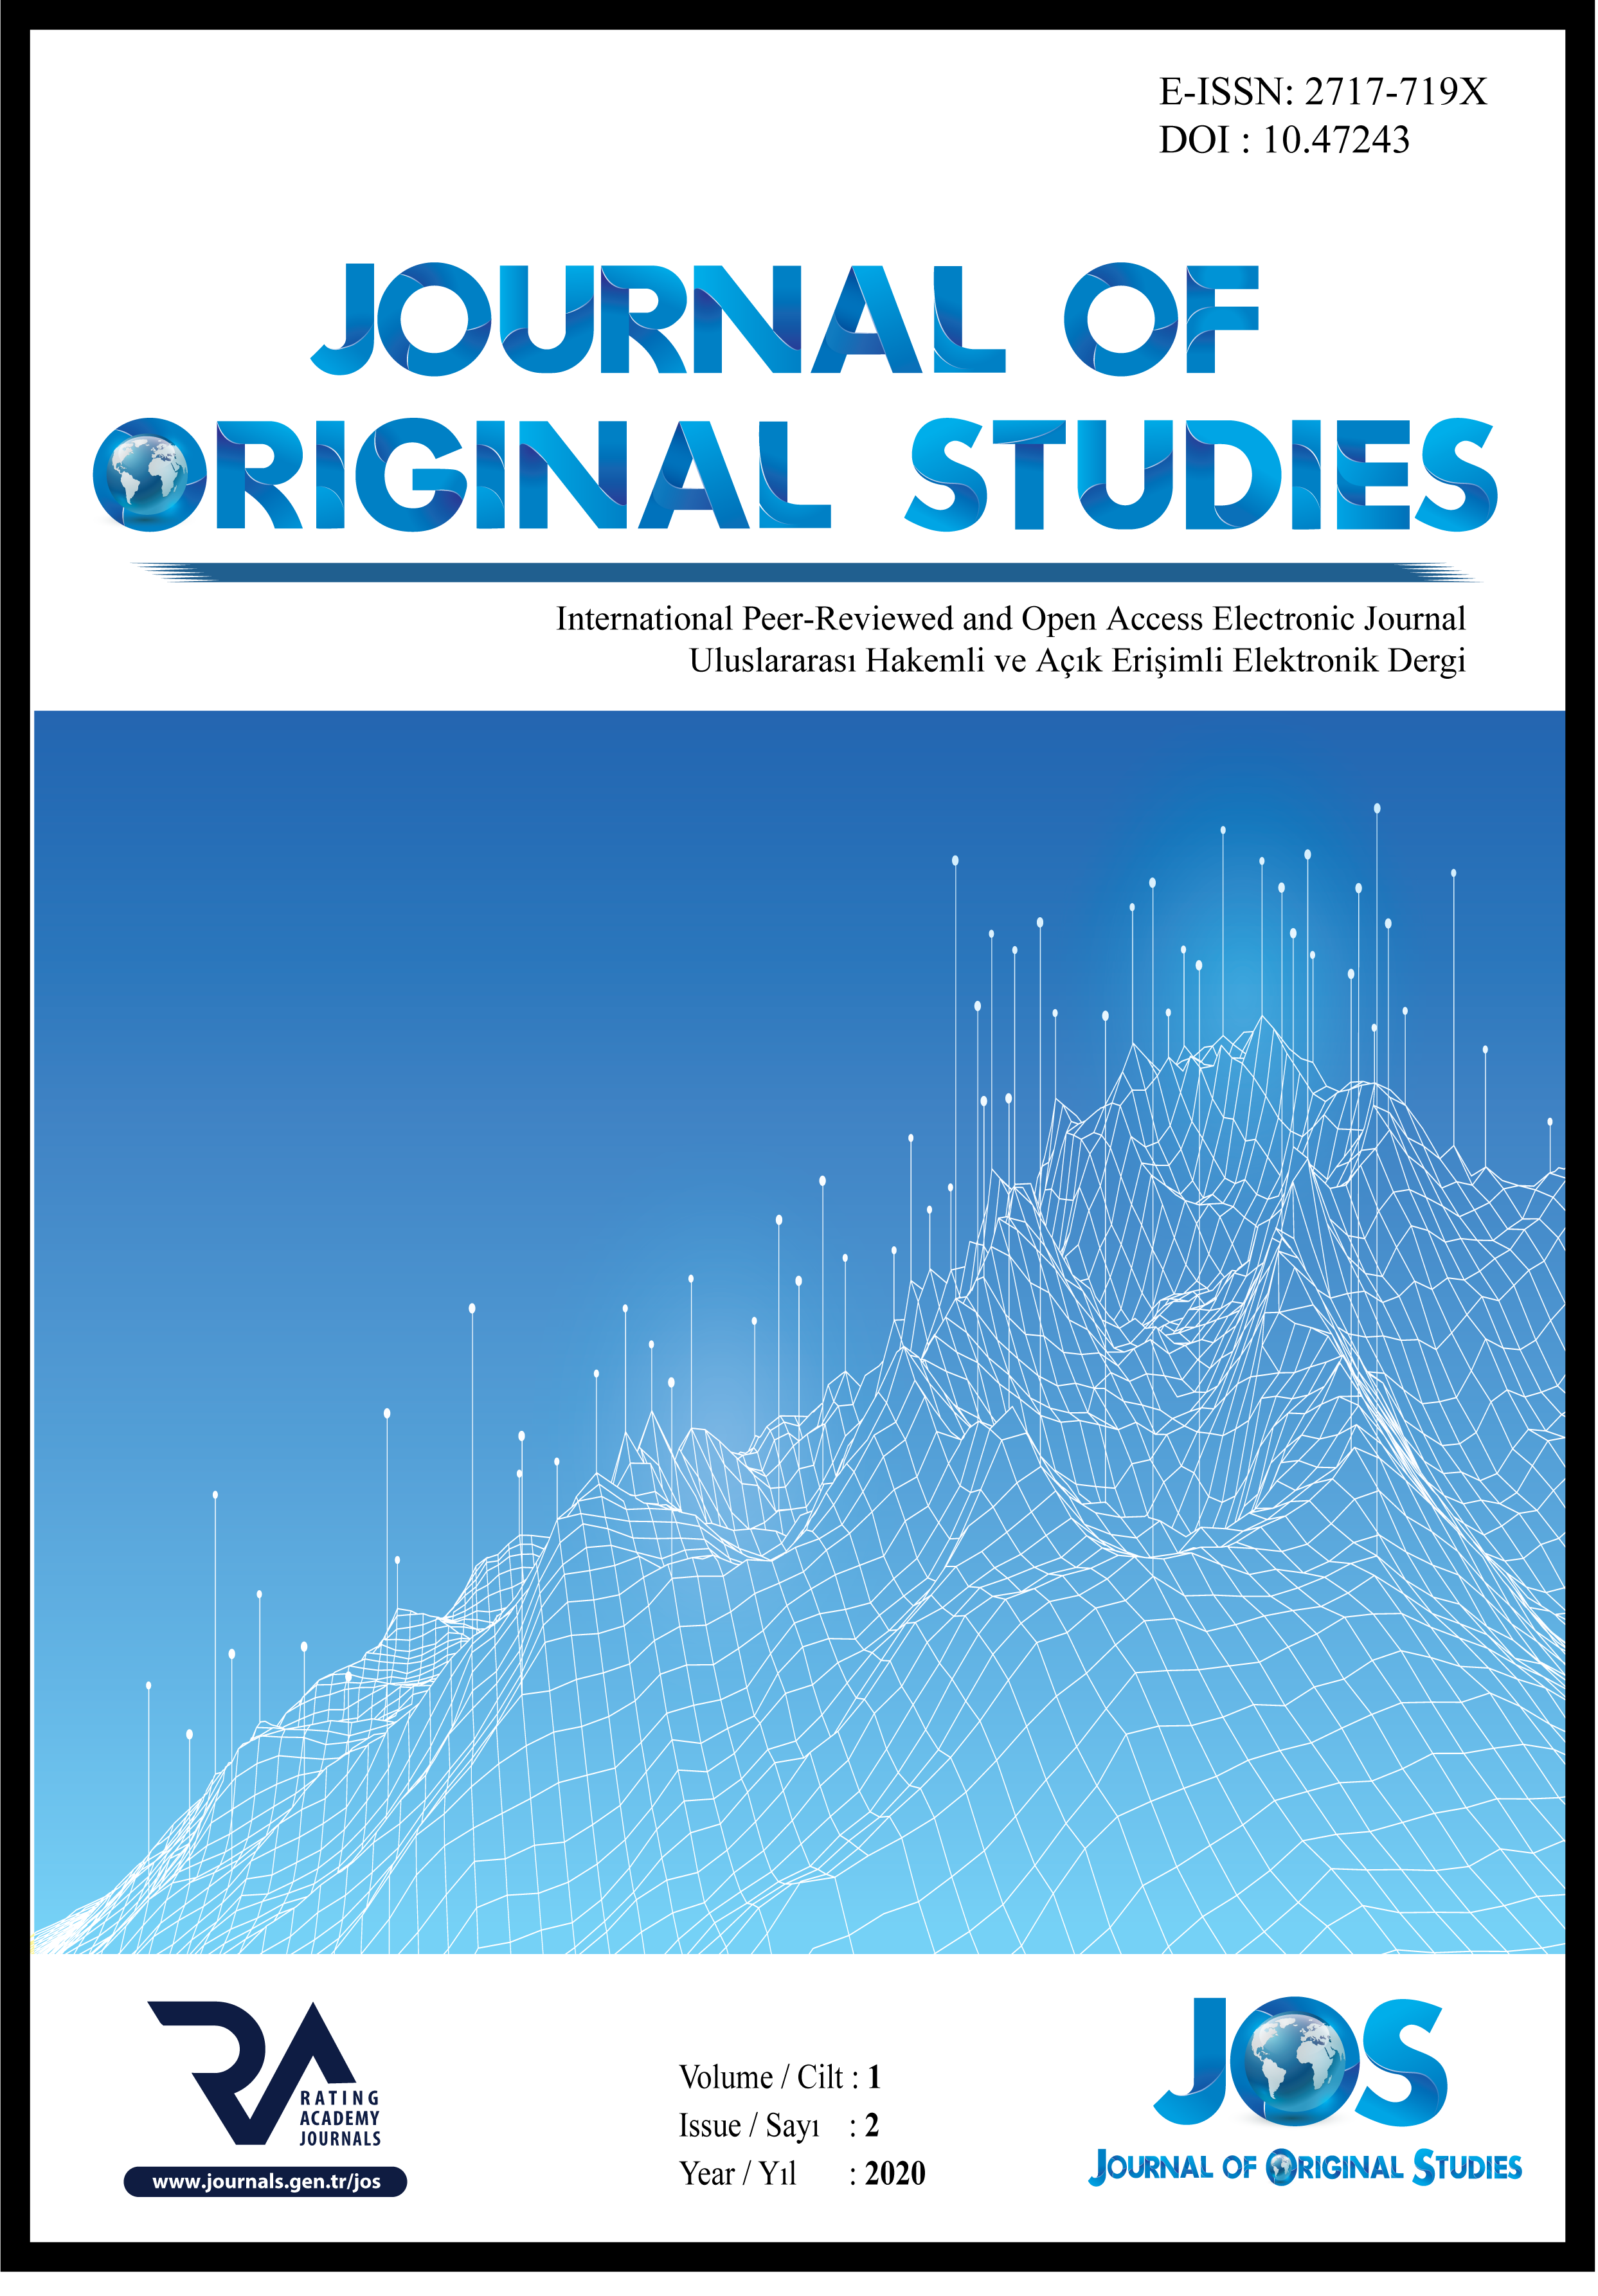 					View Vol. 1 No. 2 (2020):  Journal of Original Studies - Volume:1 Issue:2 Year:2020
				